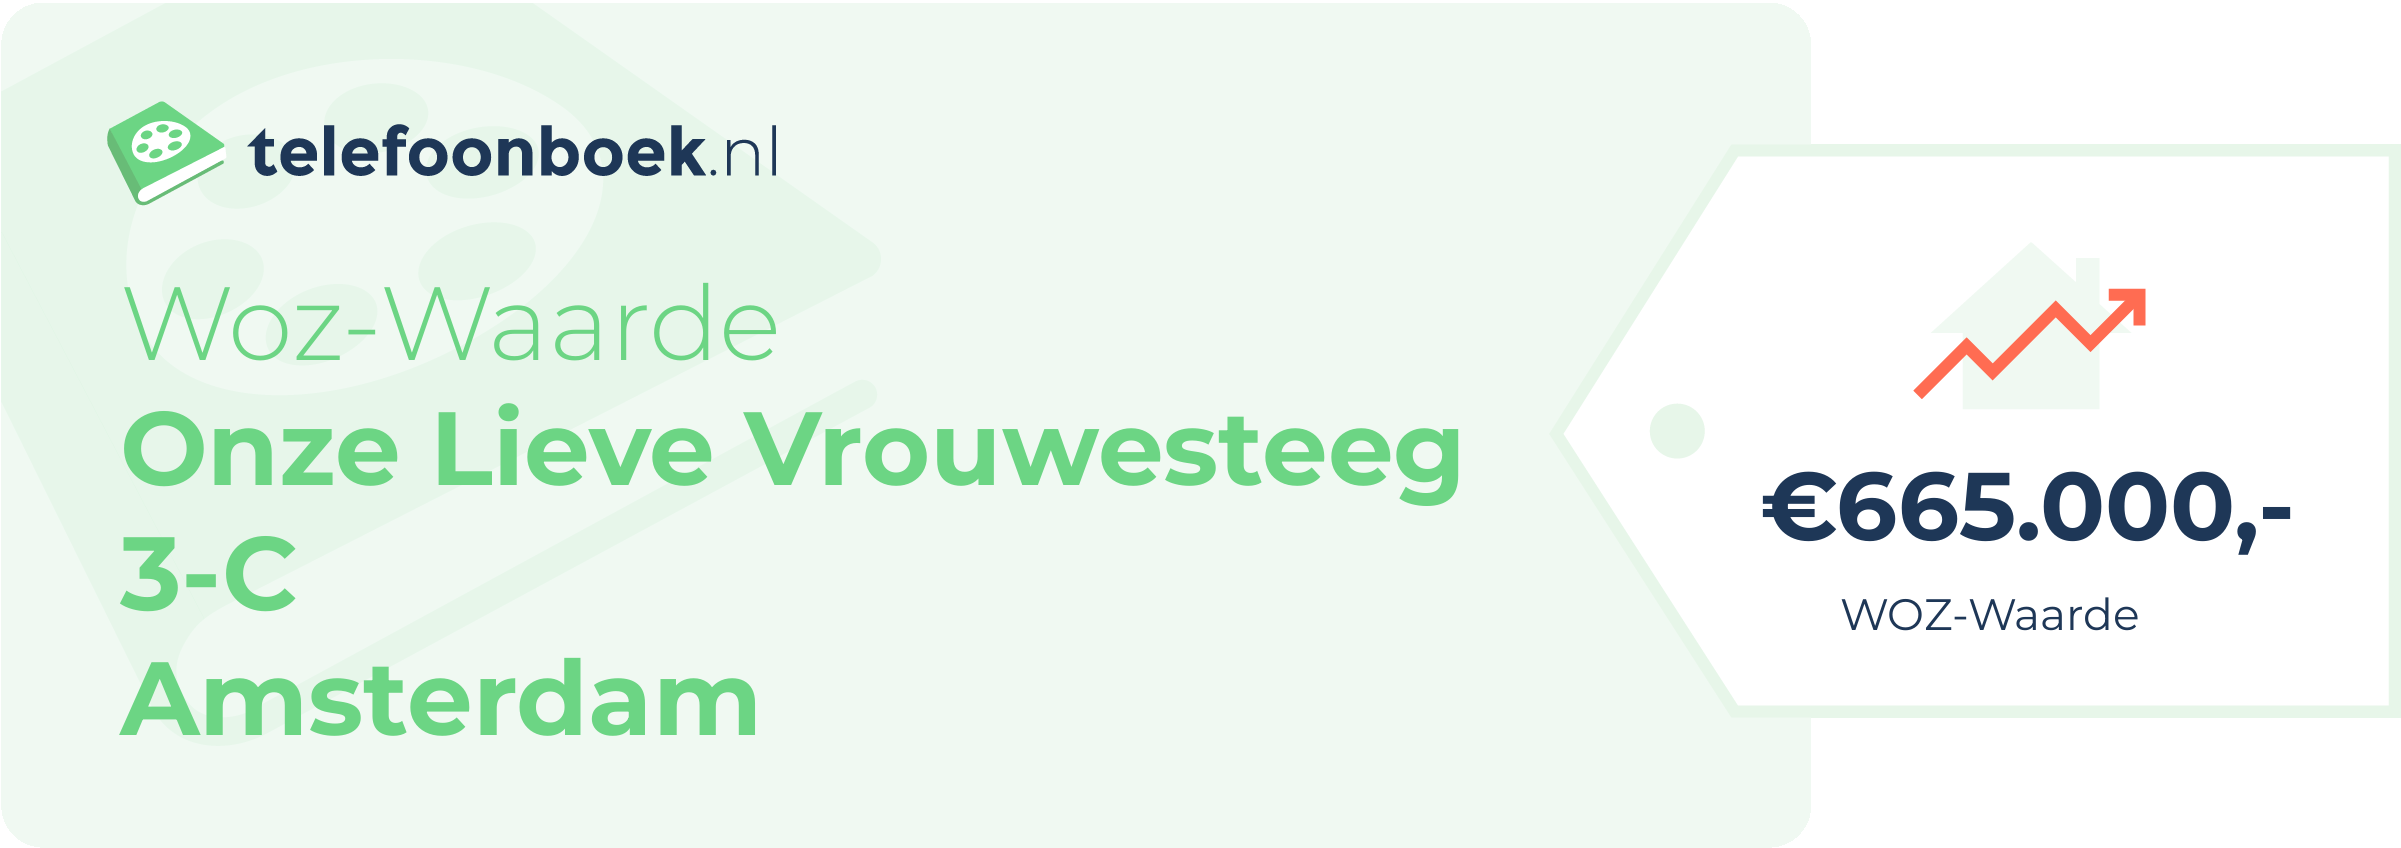 WOZ-waarde Onze Lieve Vrouwesteeg 3-C Amsterdam